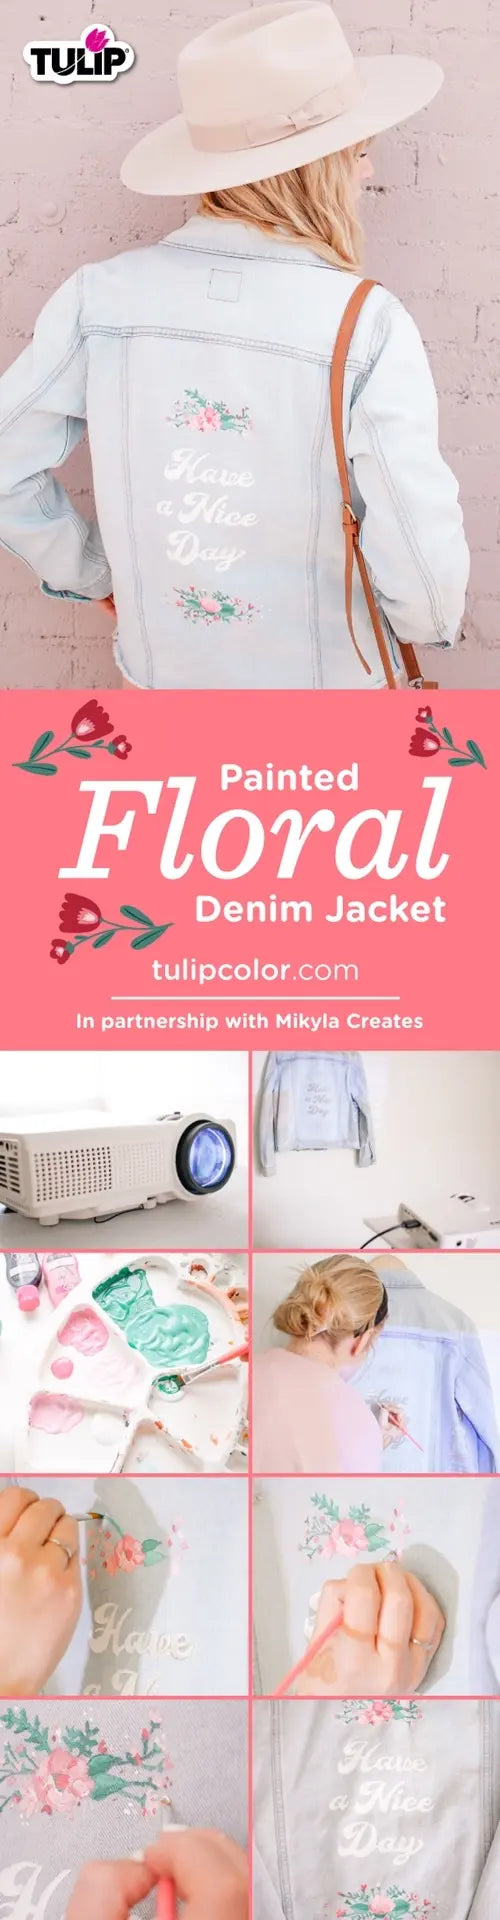 Tulip Painted Floral Denim Jacket